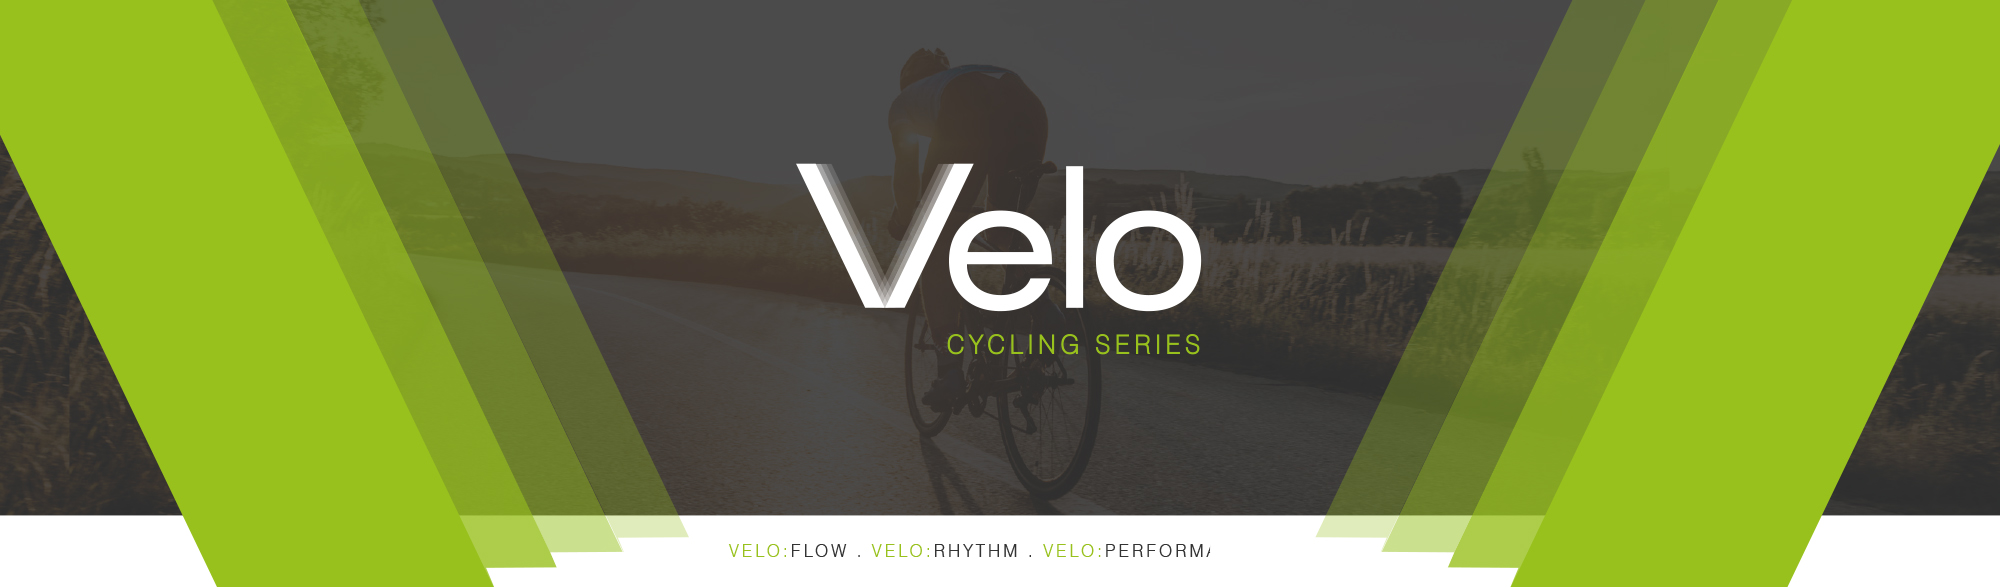 Velo Cycling Series